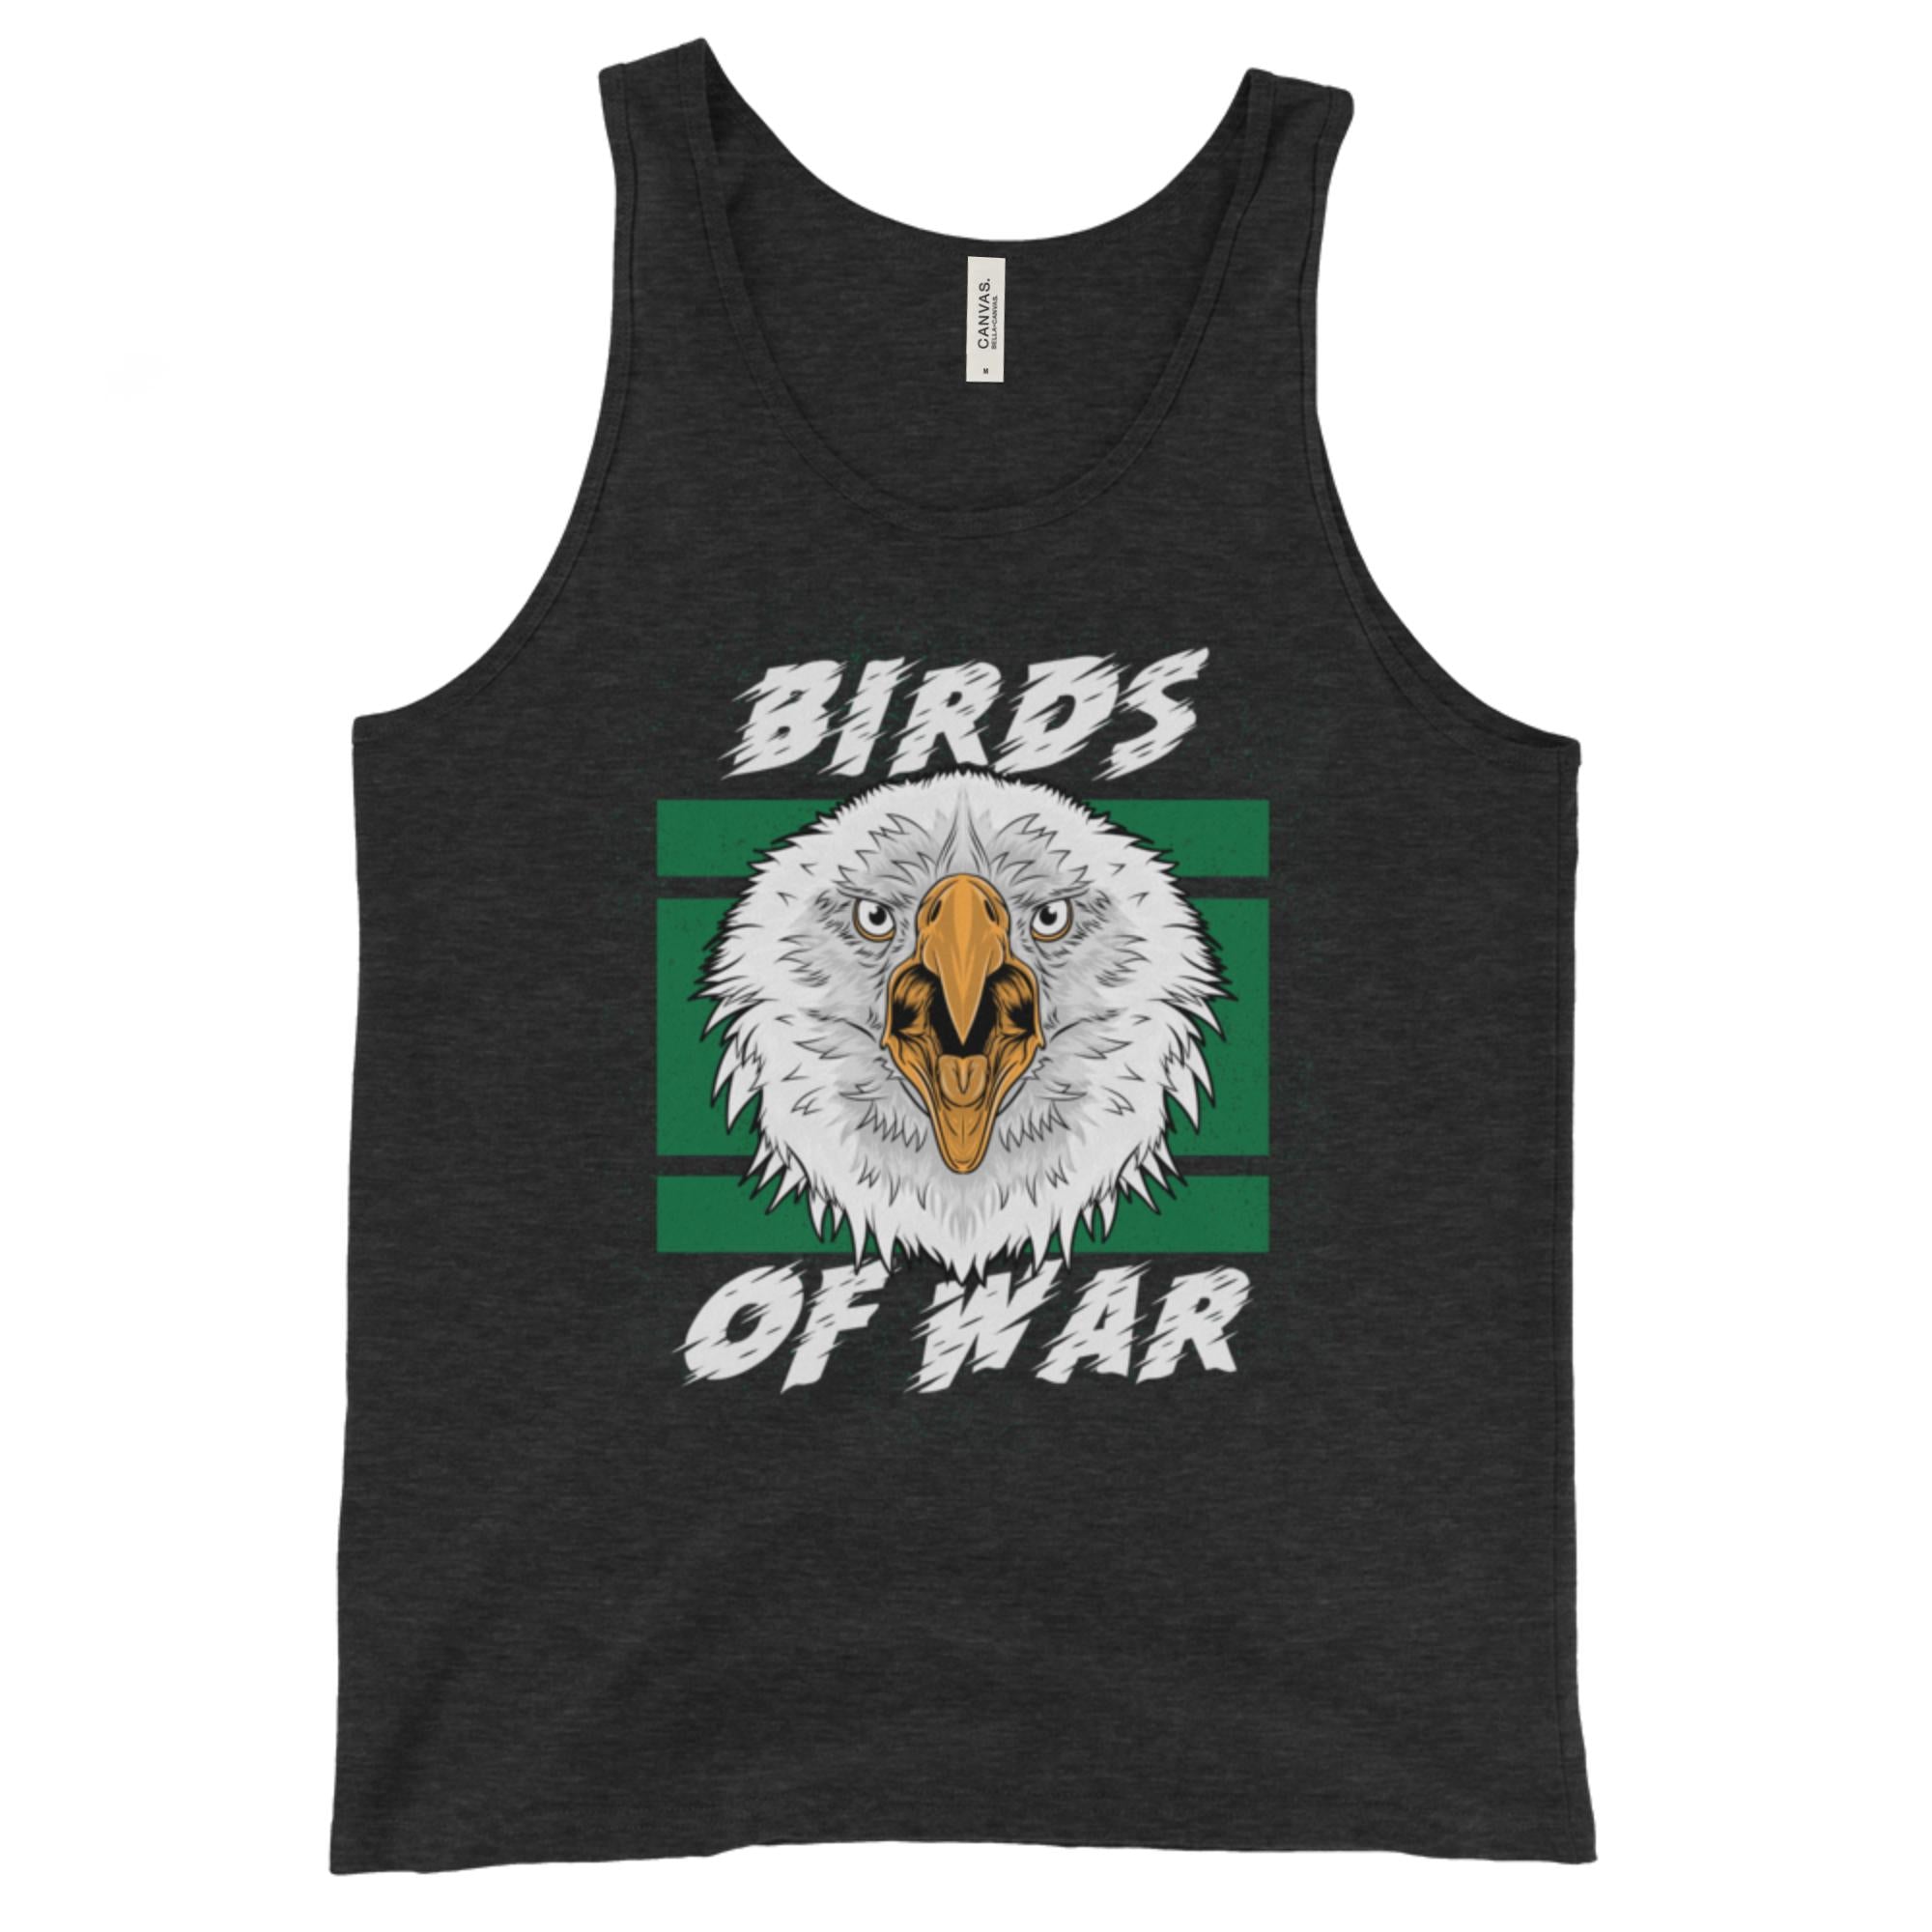 "Birds of War" Tank Top